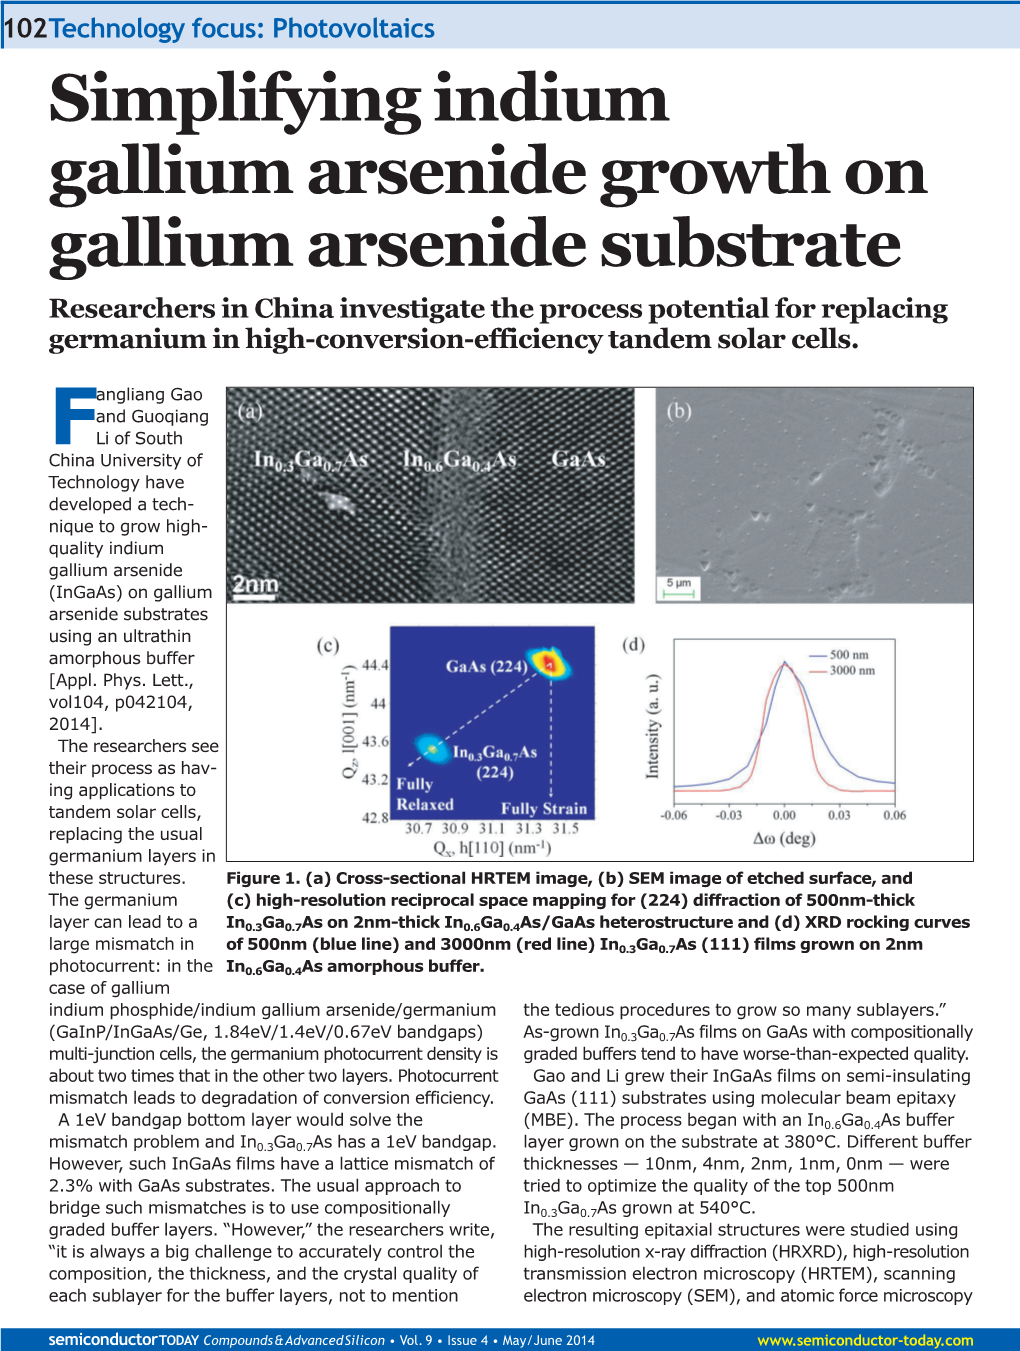 Simplifying Indium Gallium Arsenide Growth on Gallium Arsenide Substrate